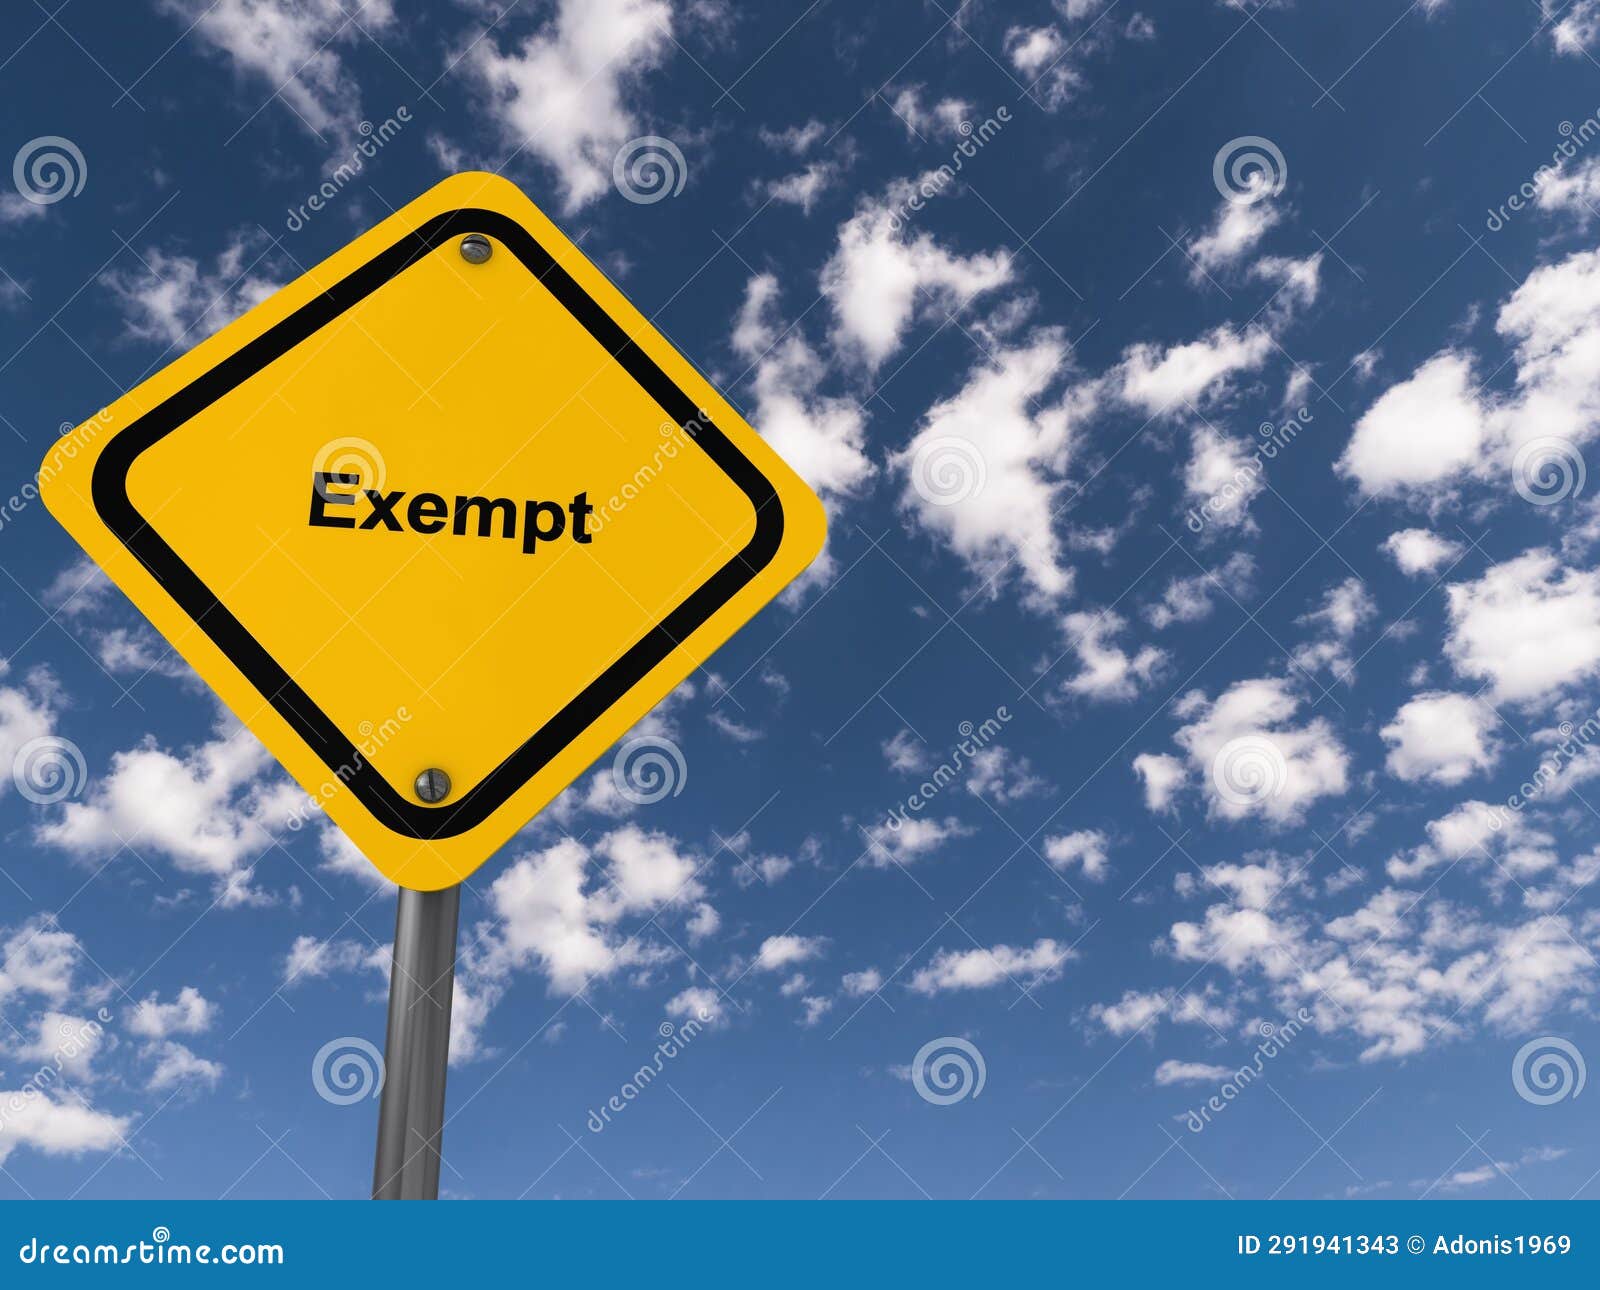 exempt traffic sign on blue sky